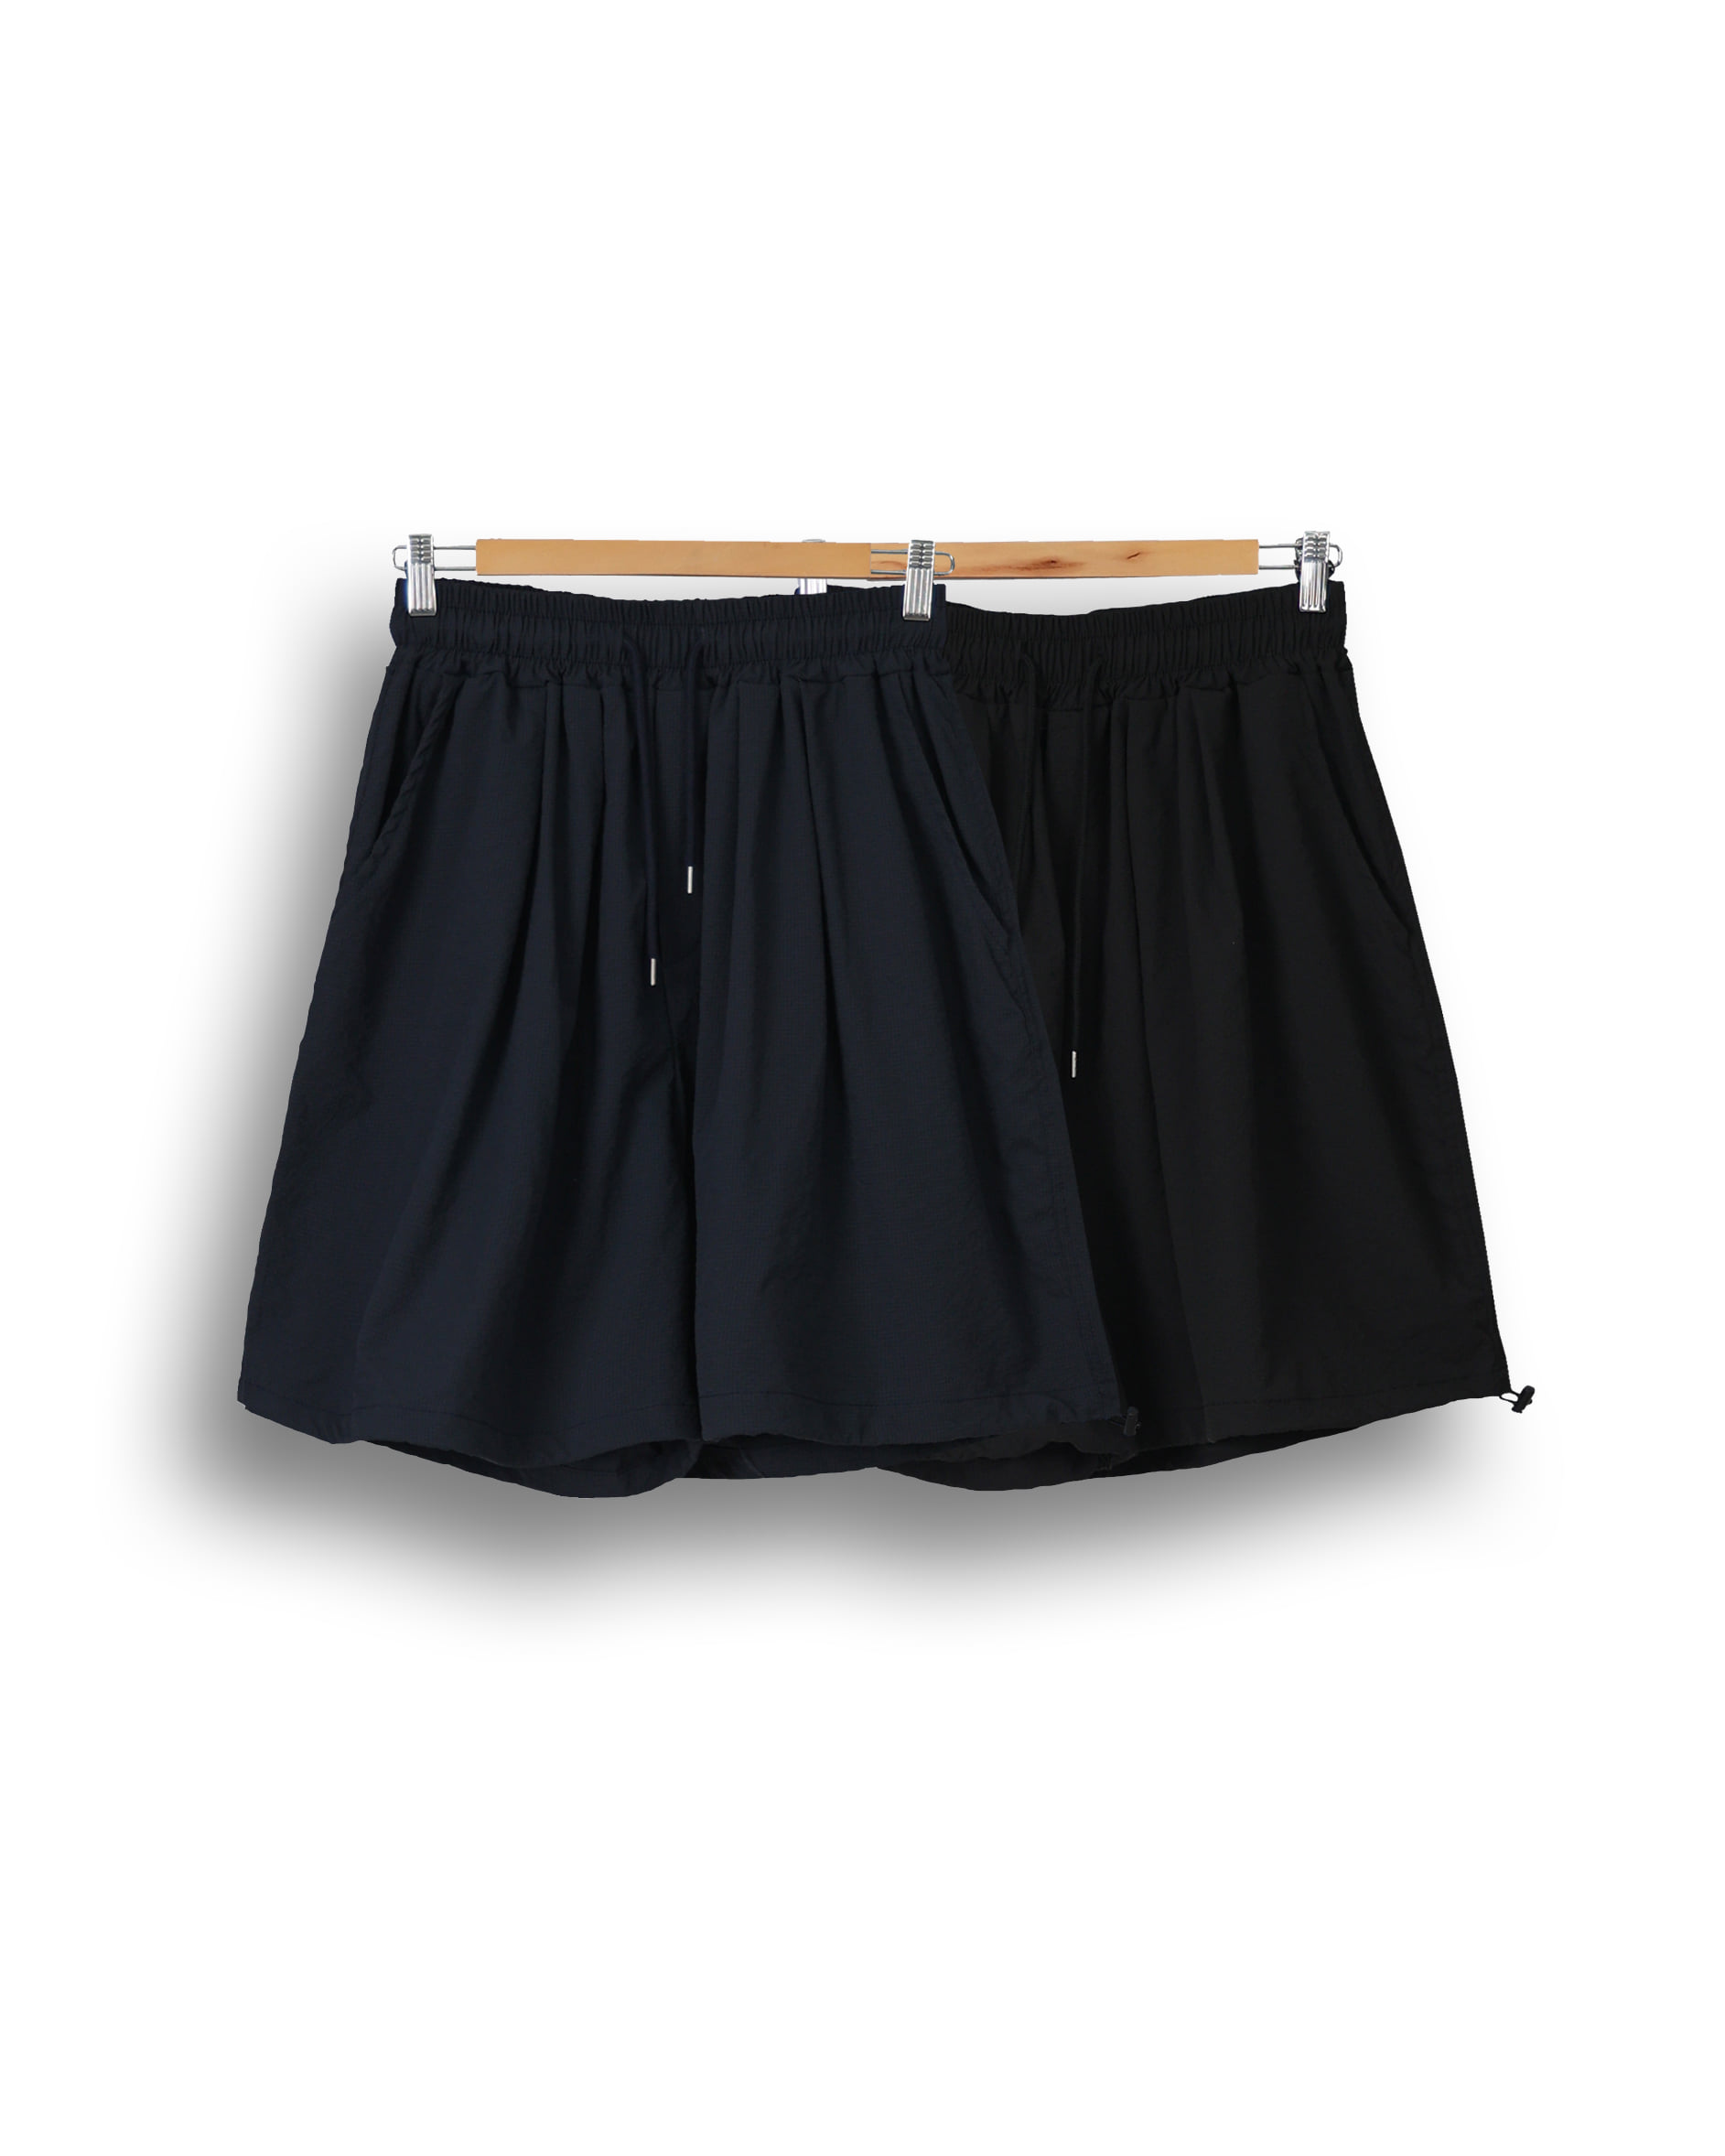 COCKS Easy String Half Shorts Set Up (Black/Navy)